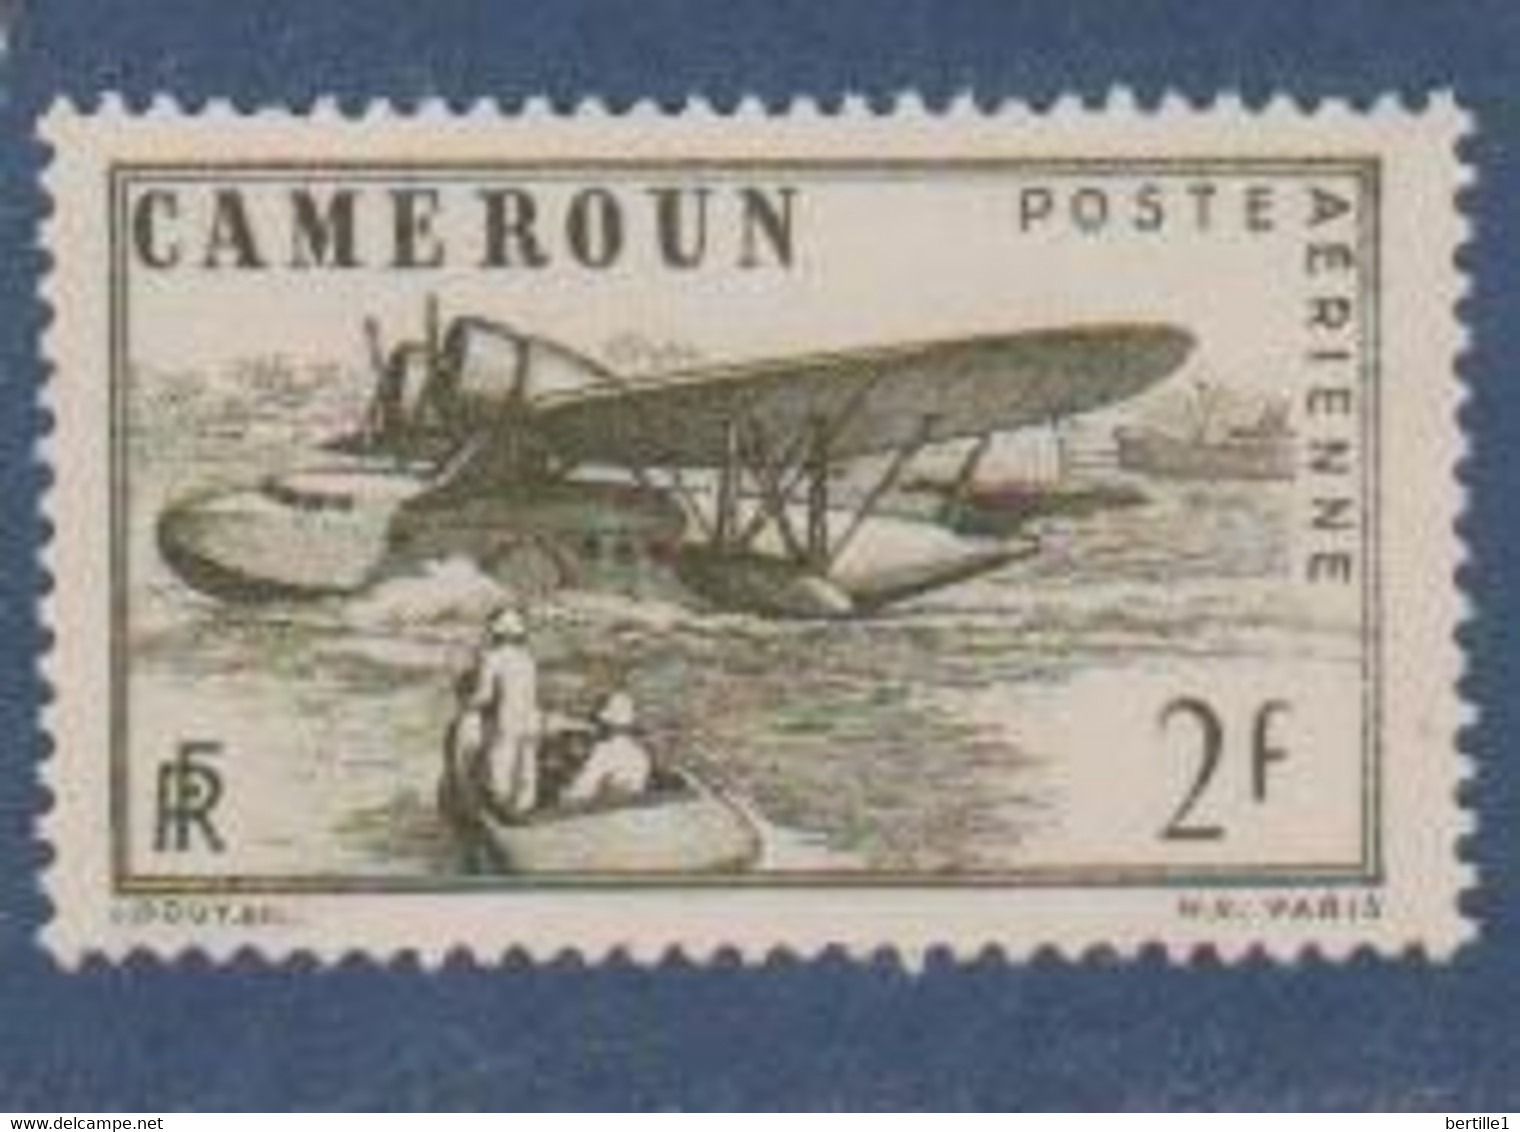 CAMEROUN          N°  YVERT  PA 4   NEUF AVEC CHARNIERES   ( CHARN 04/53  ) - Poste Aérienne